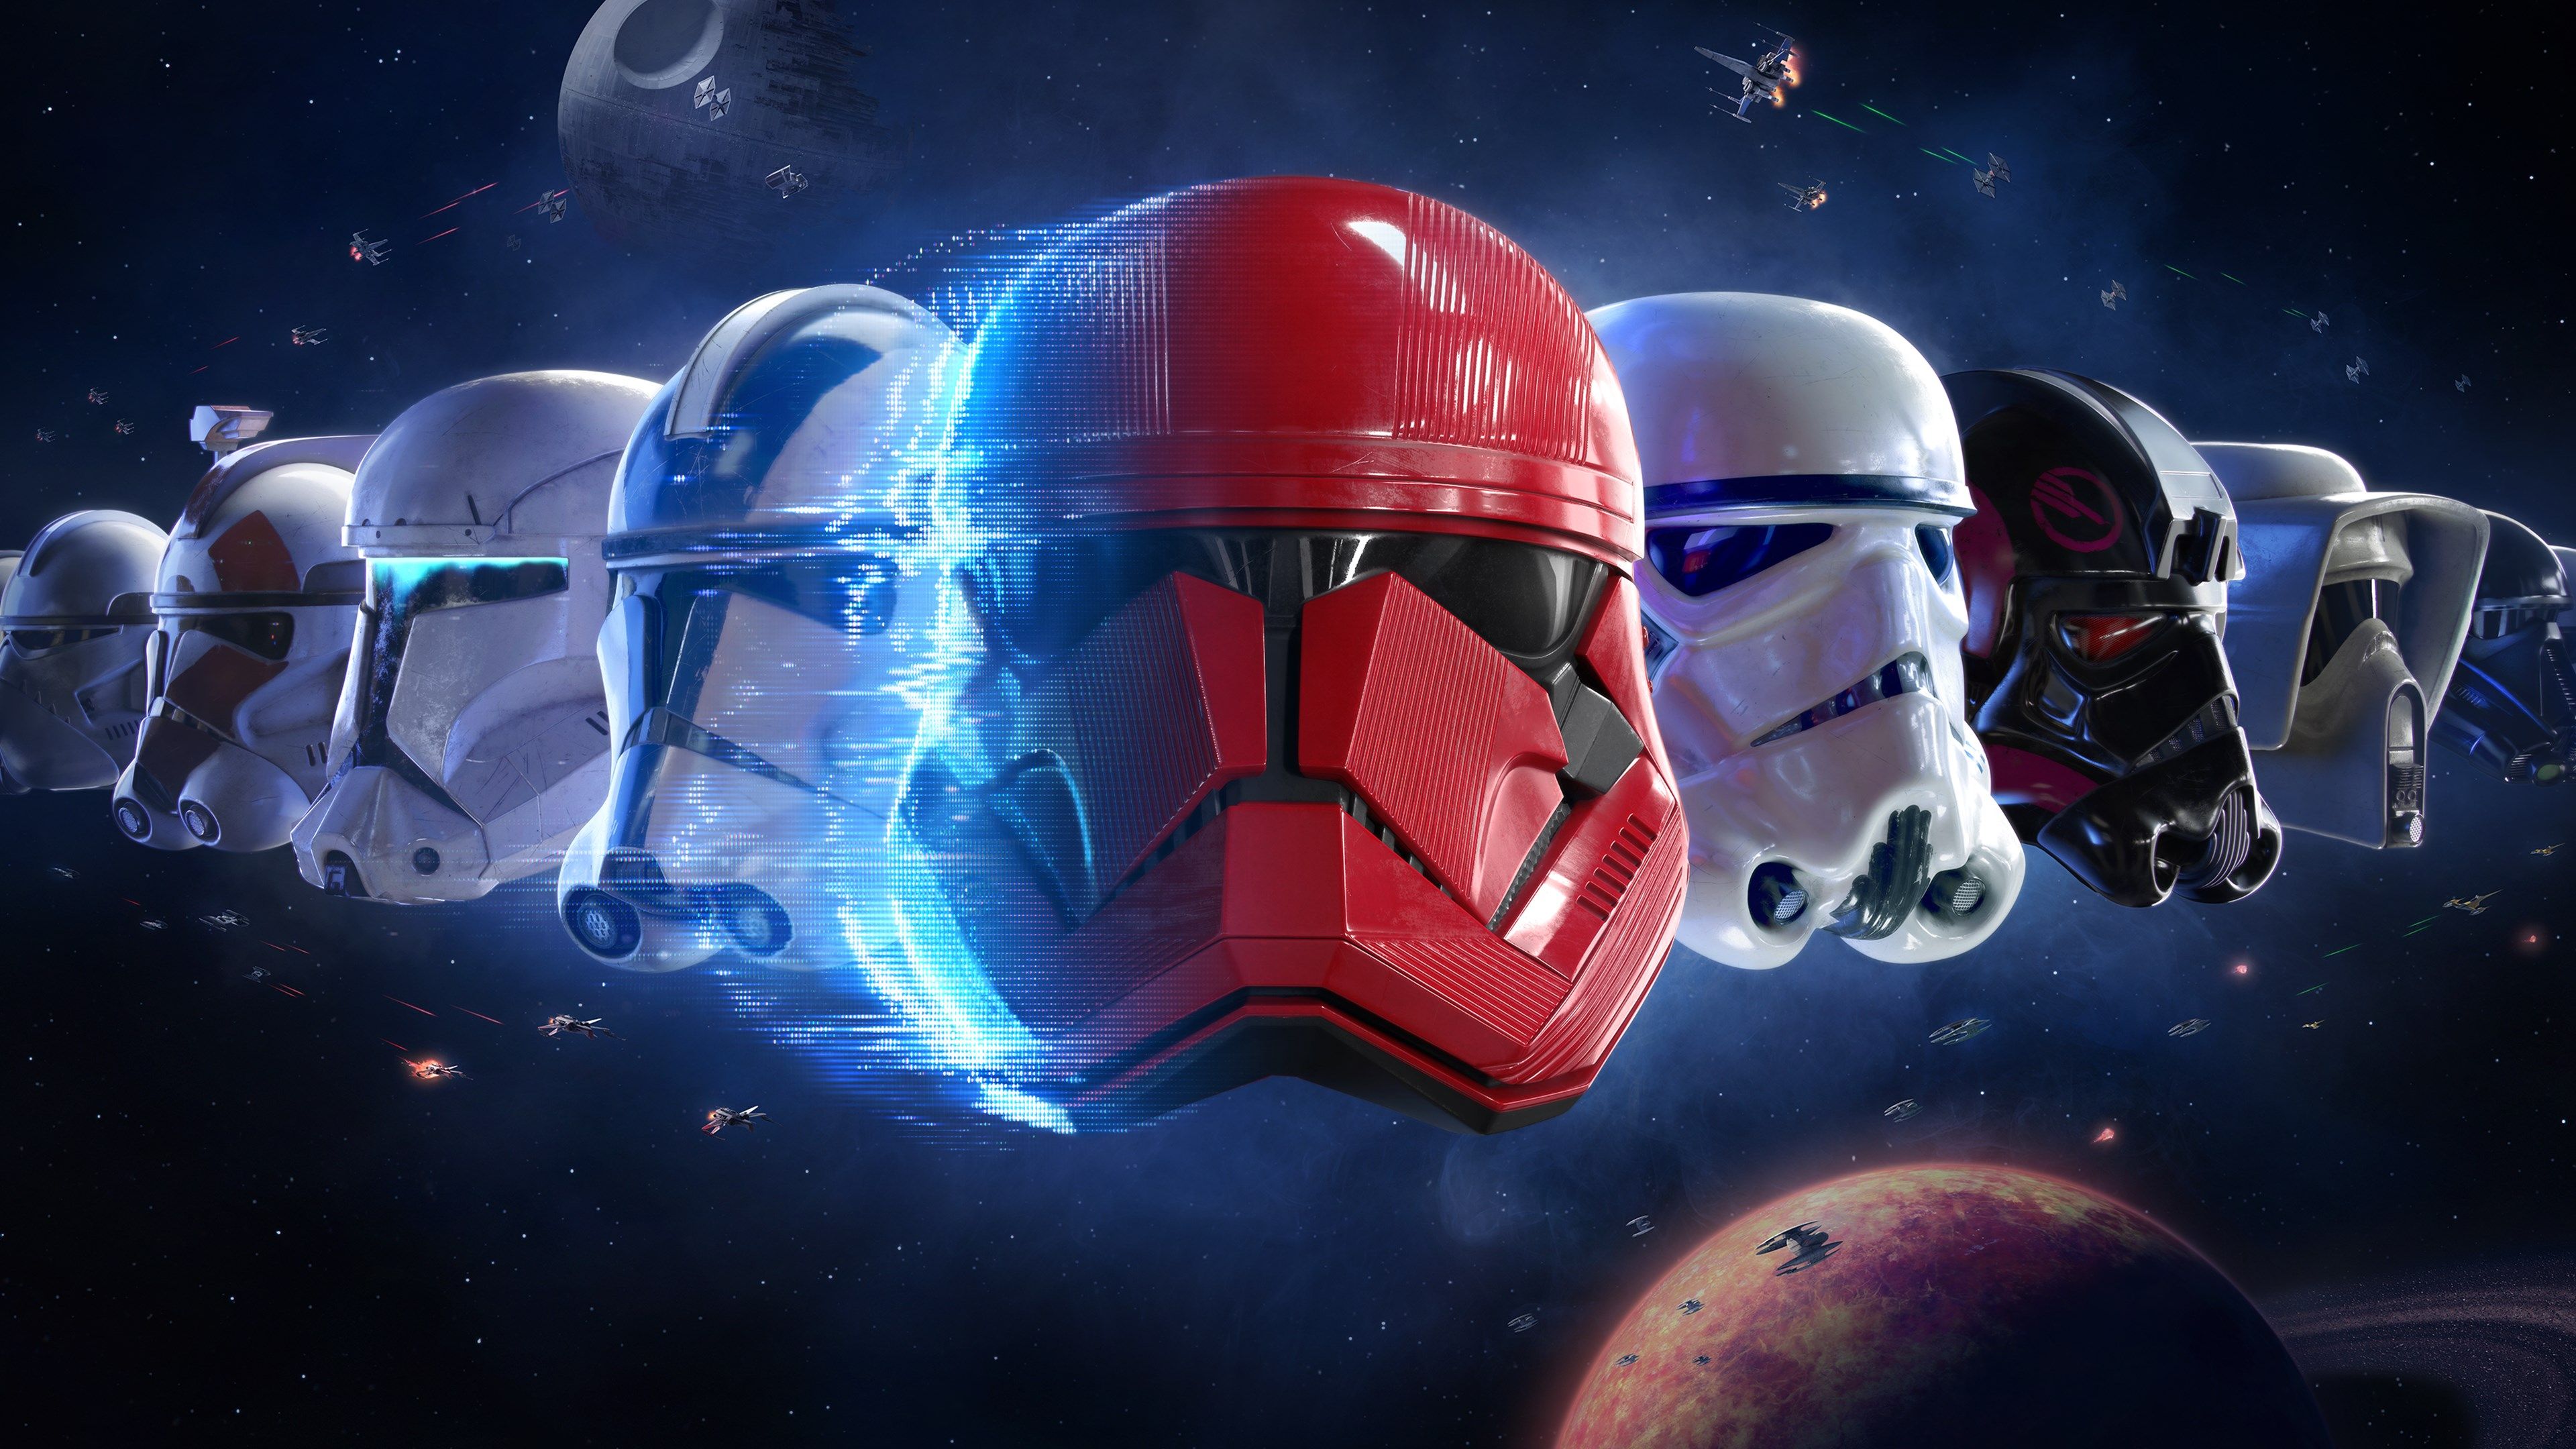 https://www.pixelstalk.net/wp-content/uploads/images6/Cool-4K-Star-Wars-Background.jpg